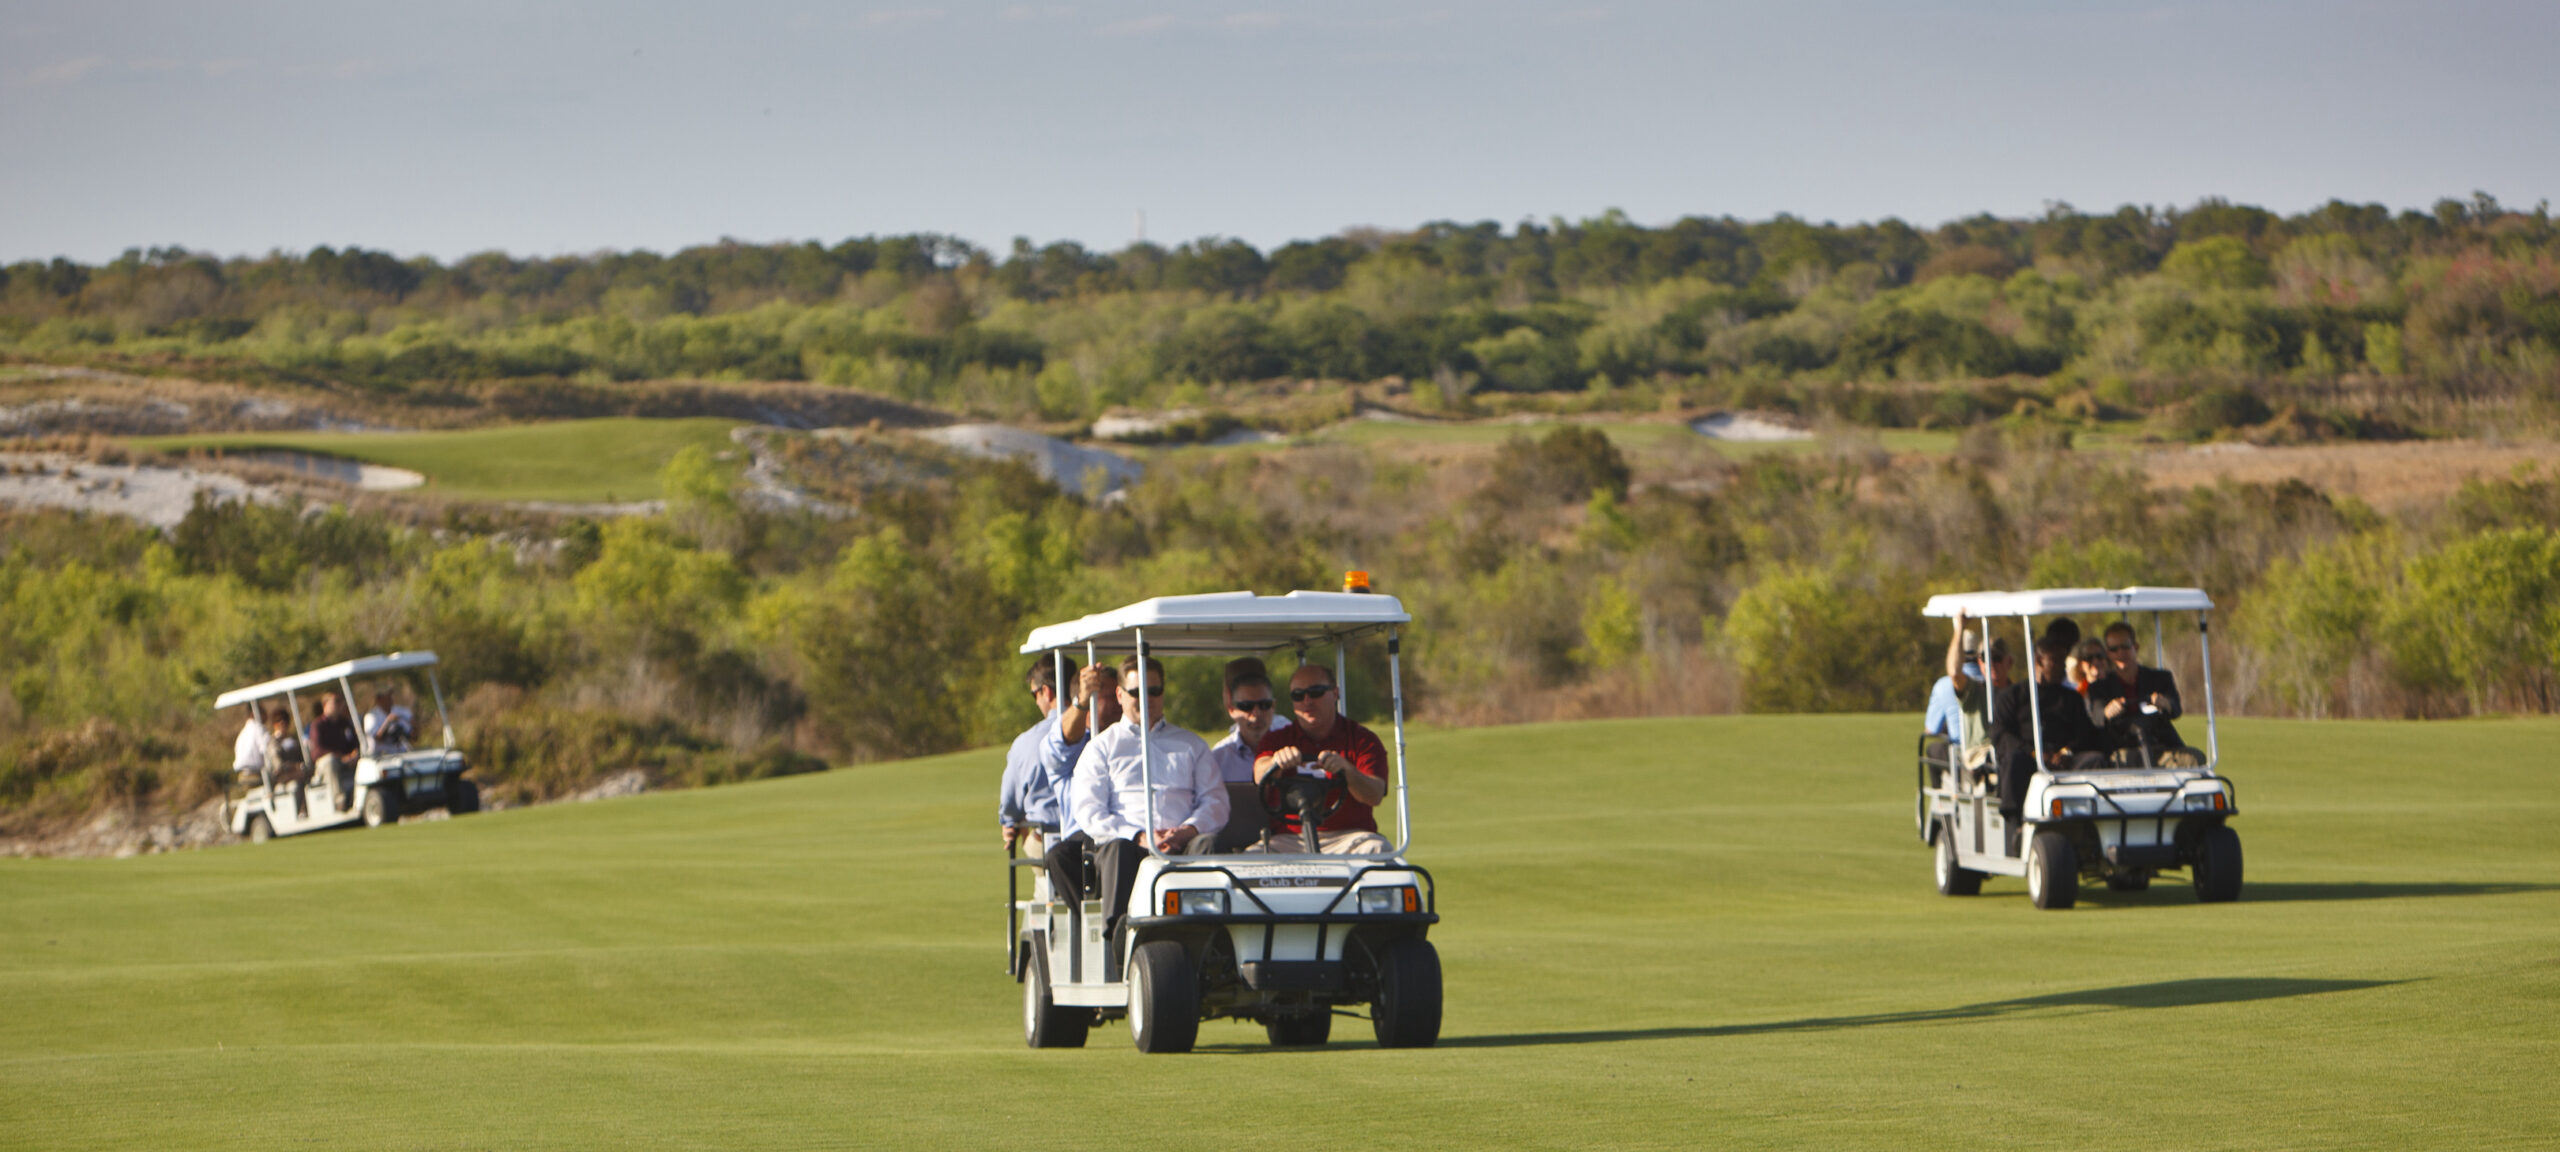 Golf carts riding around Streamsong Resort